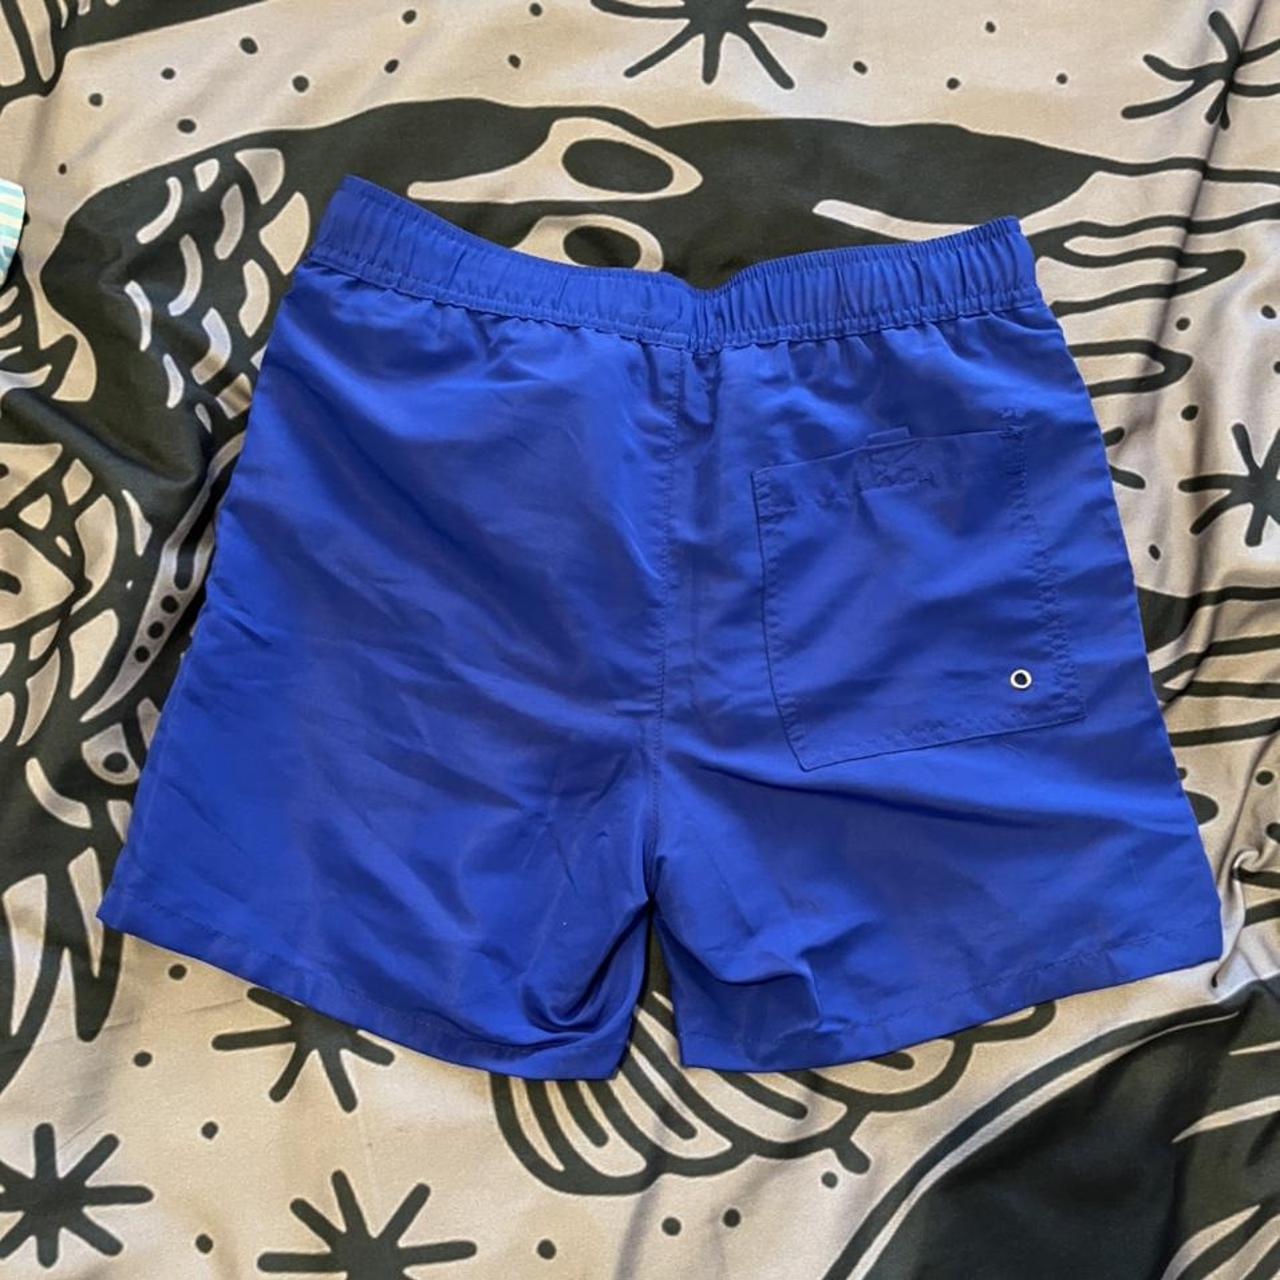 Blue swim trunks 💙 Size Xtra Small in... - Depop